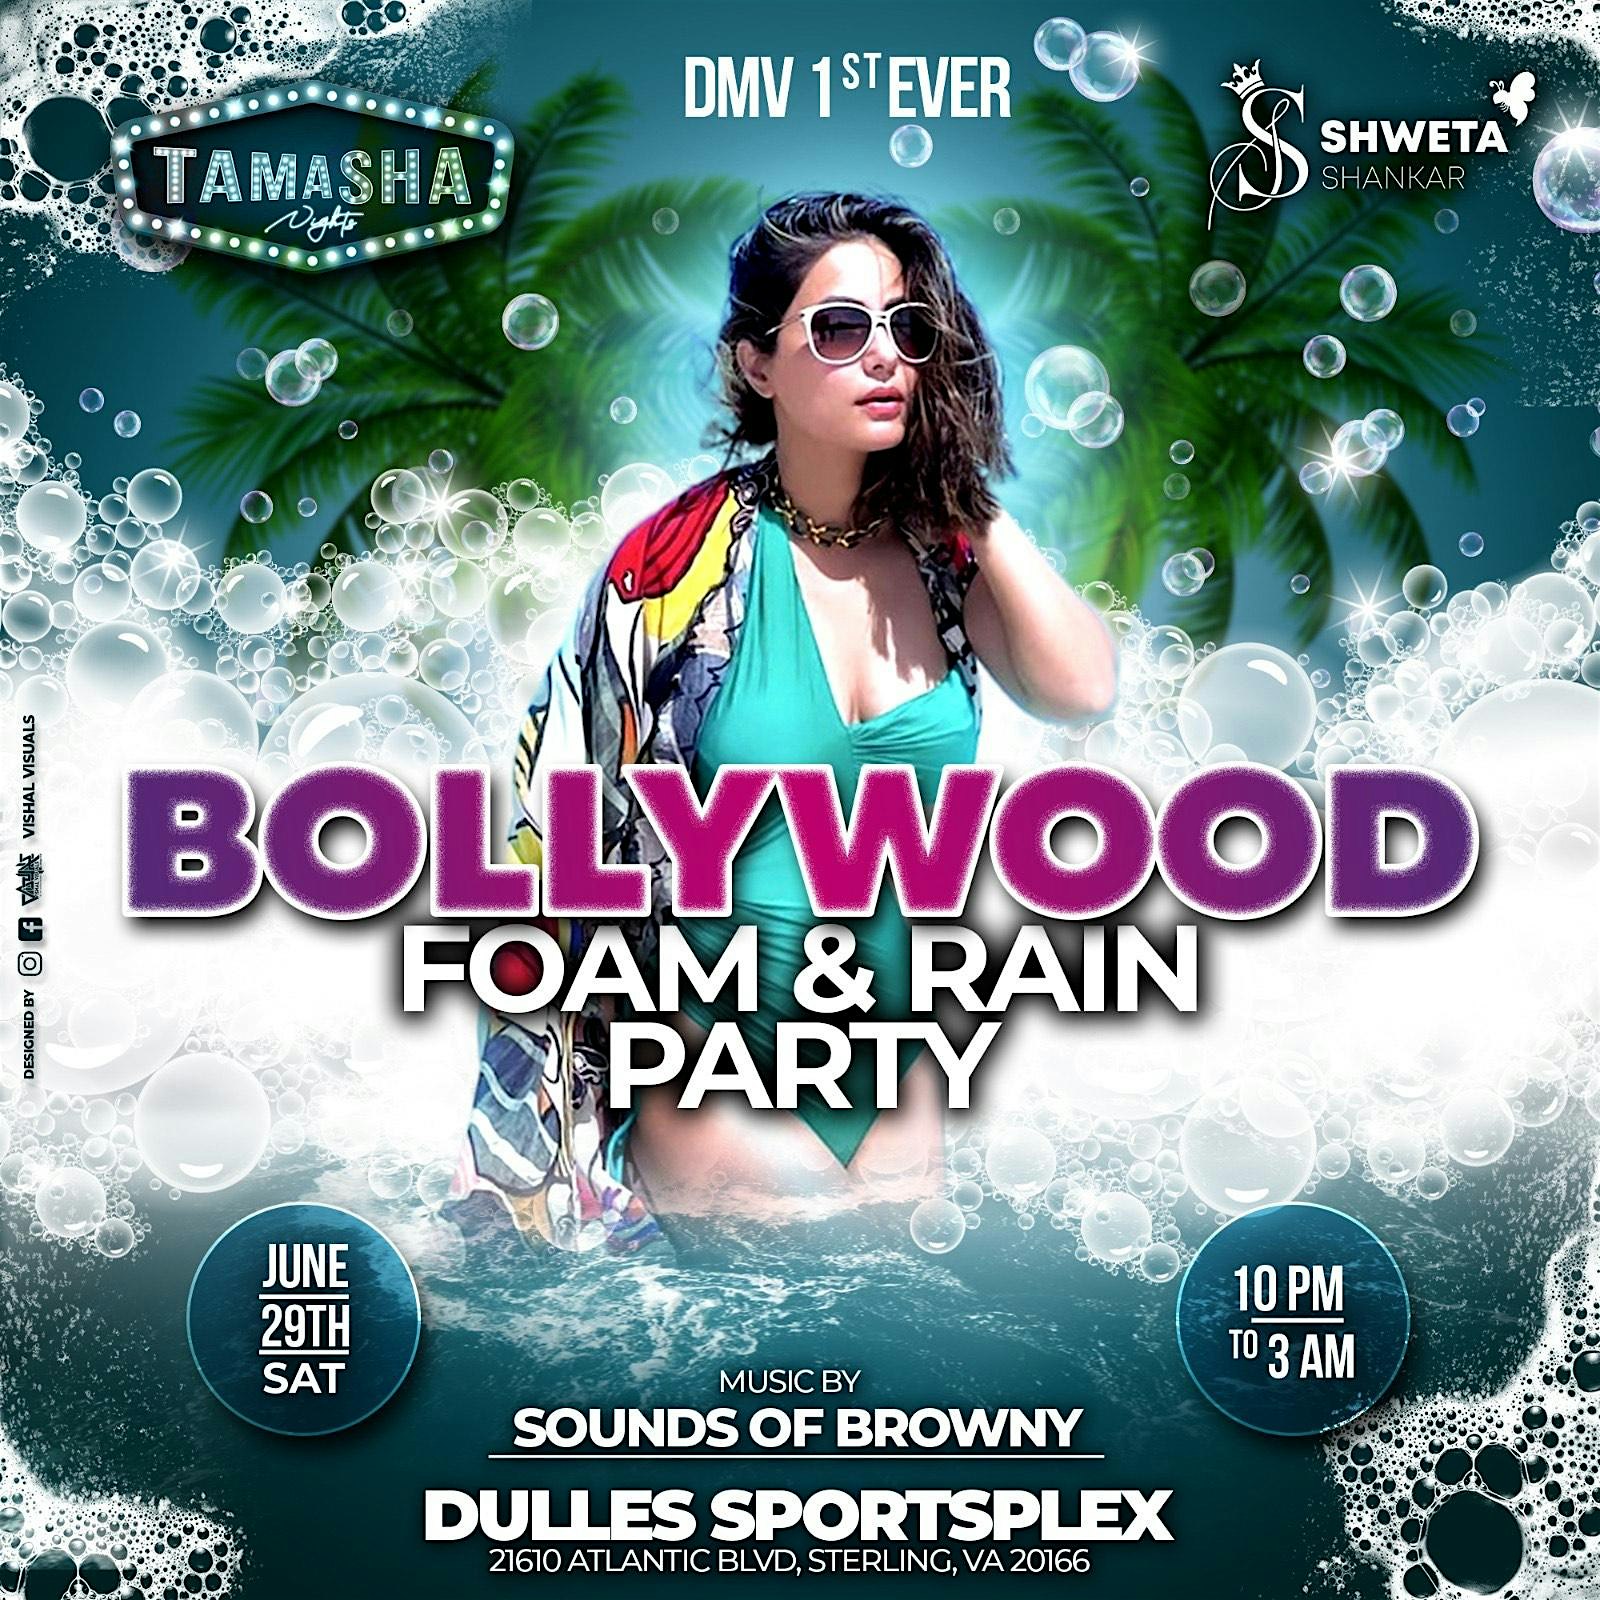 BOLLYWOOD FOAM AND RAIN PARTY @DULLES SPORTSPLEX